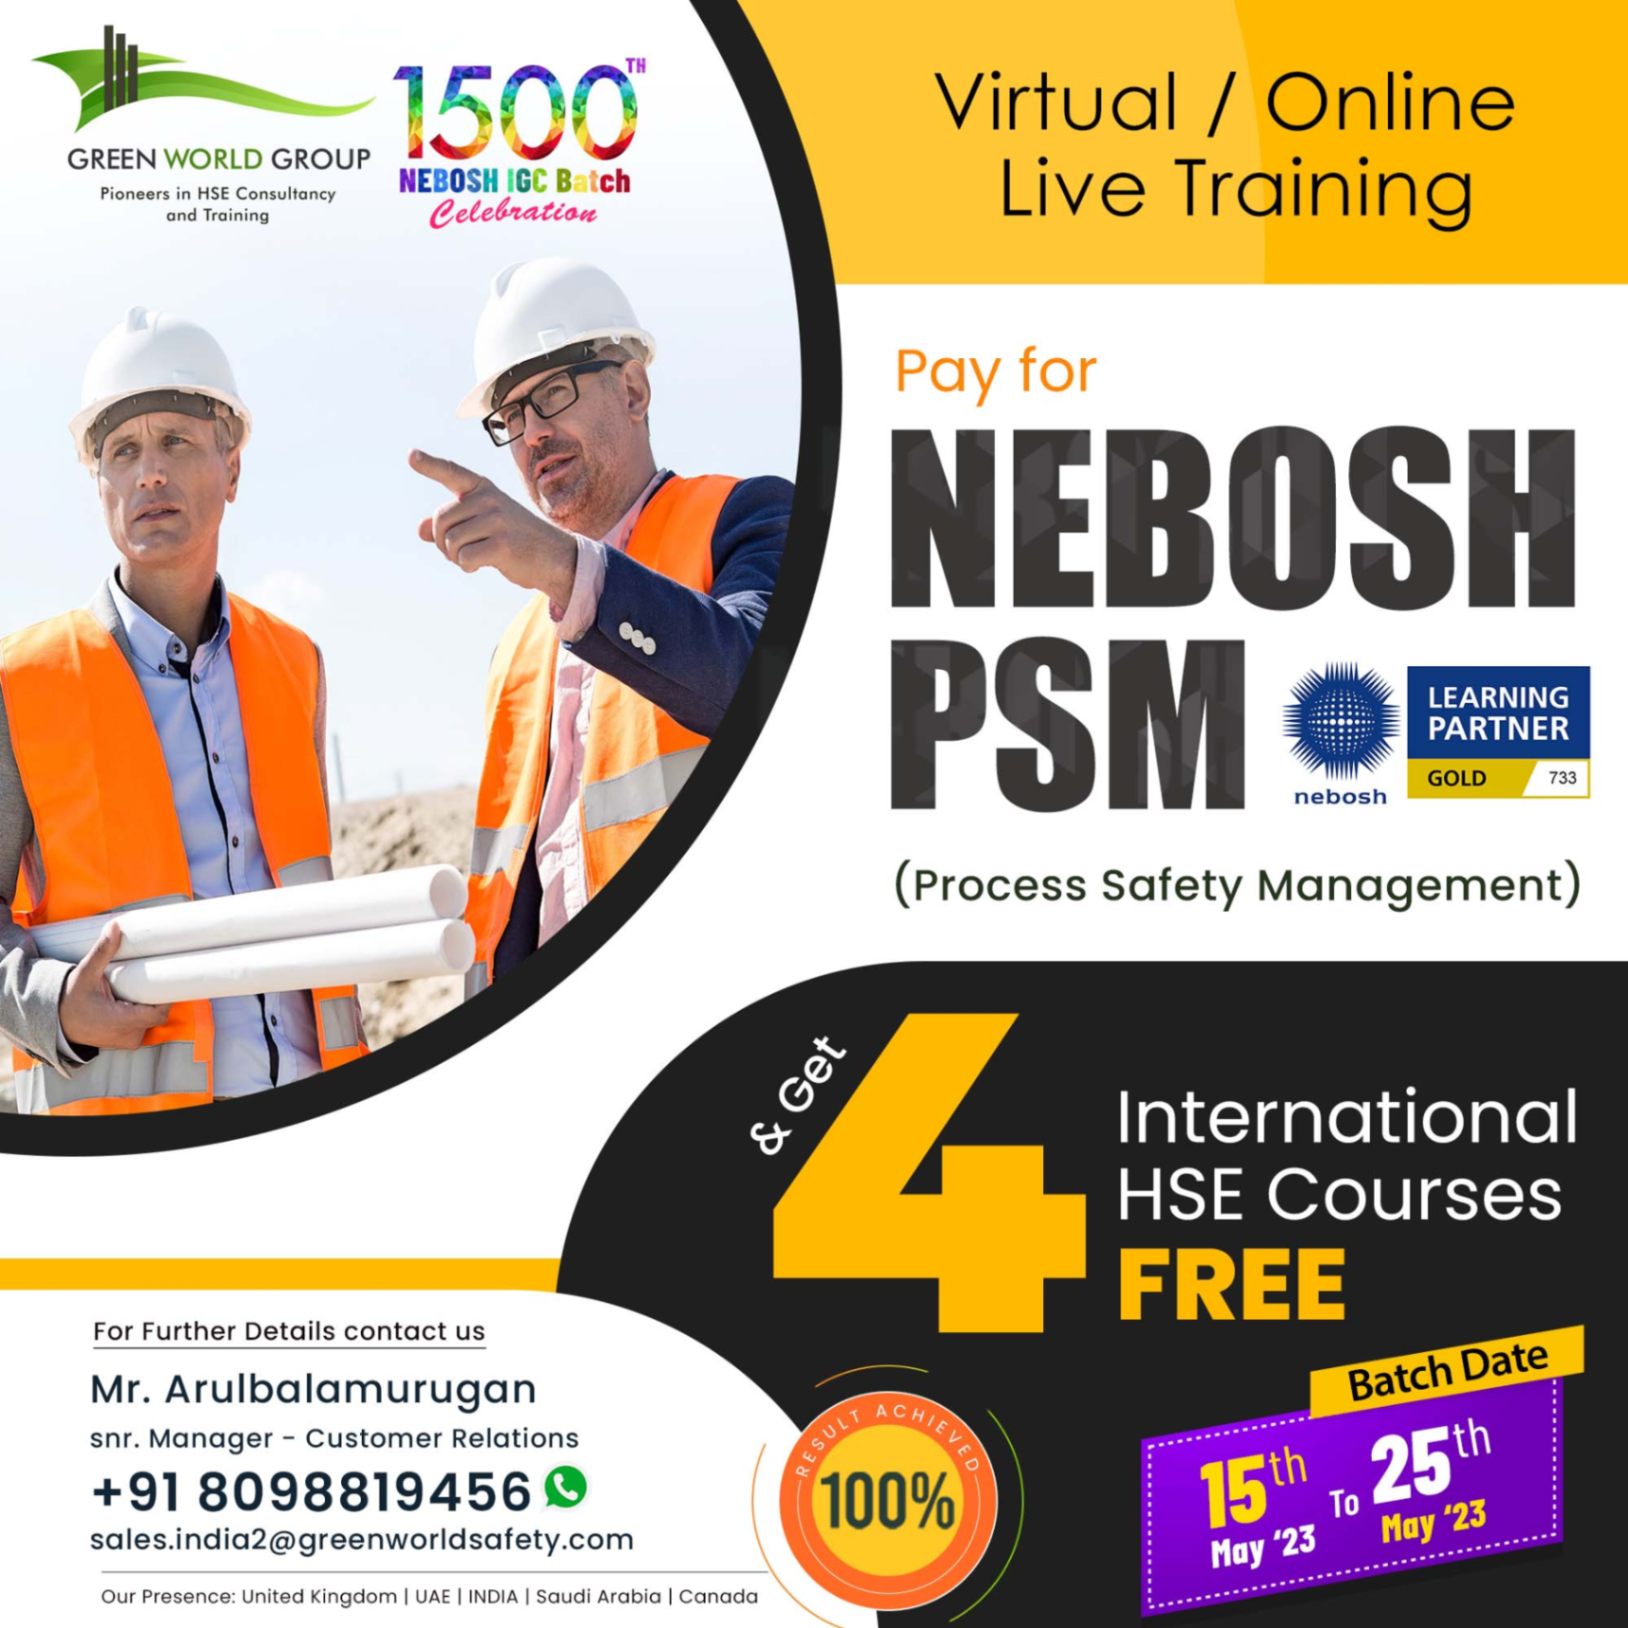 Enrol  Now for NEBOSH PSM & get 4 Intl HSE Certifications FREE